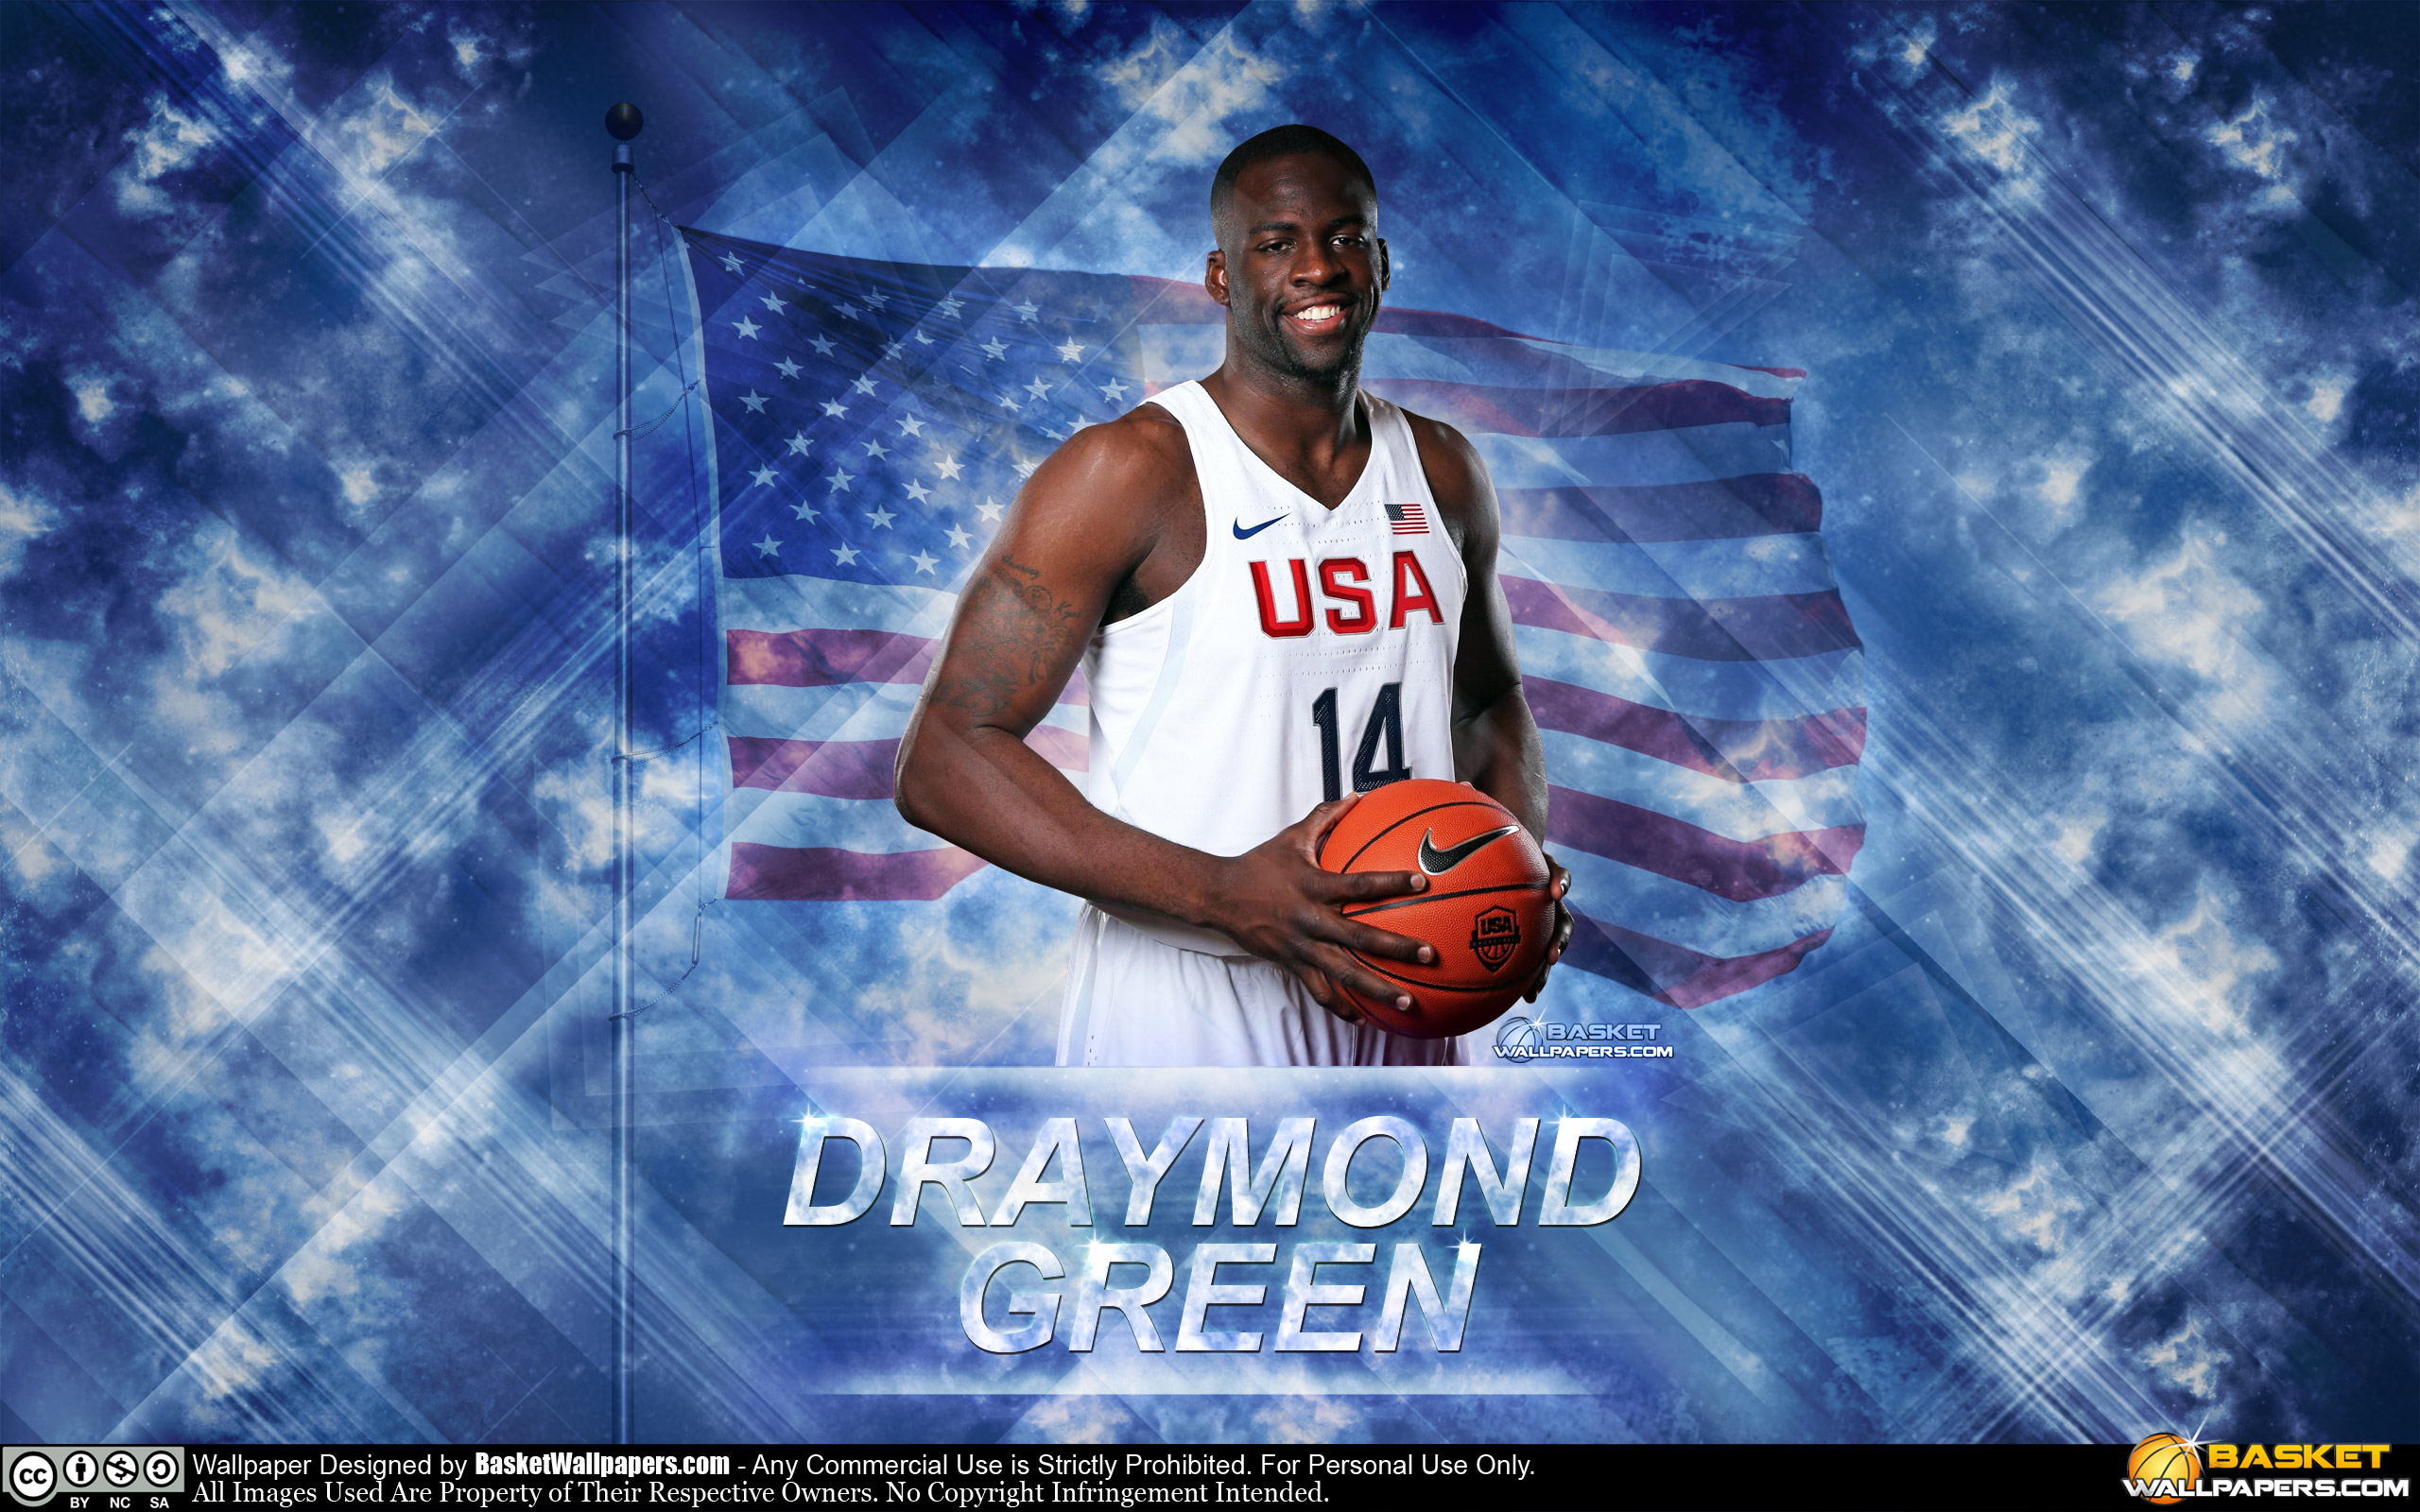 Draymond Green USA 2016 Olympics Wallpaper | Basketball Wallpapers at